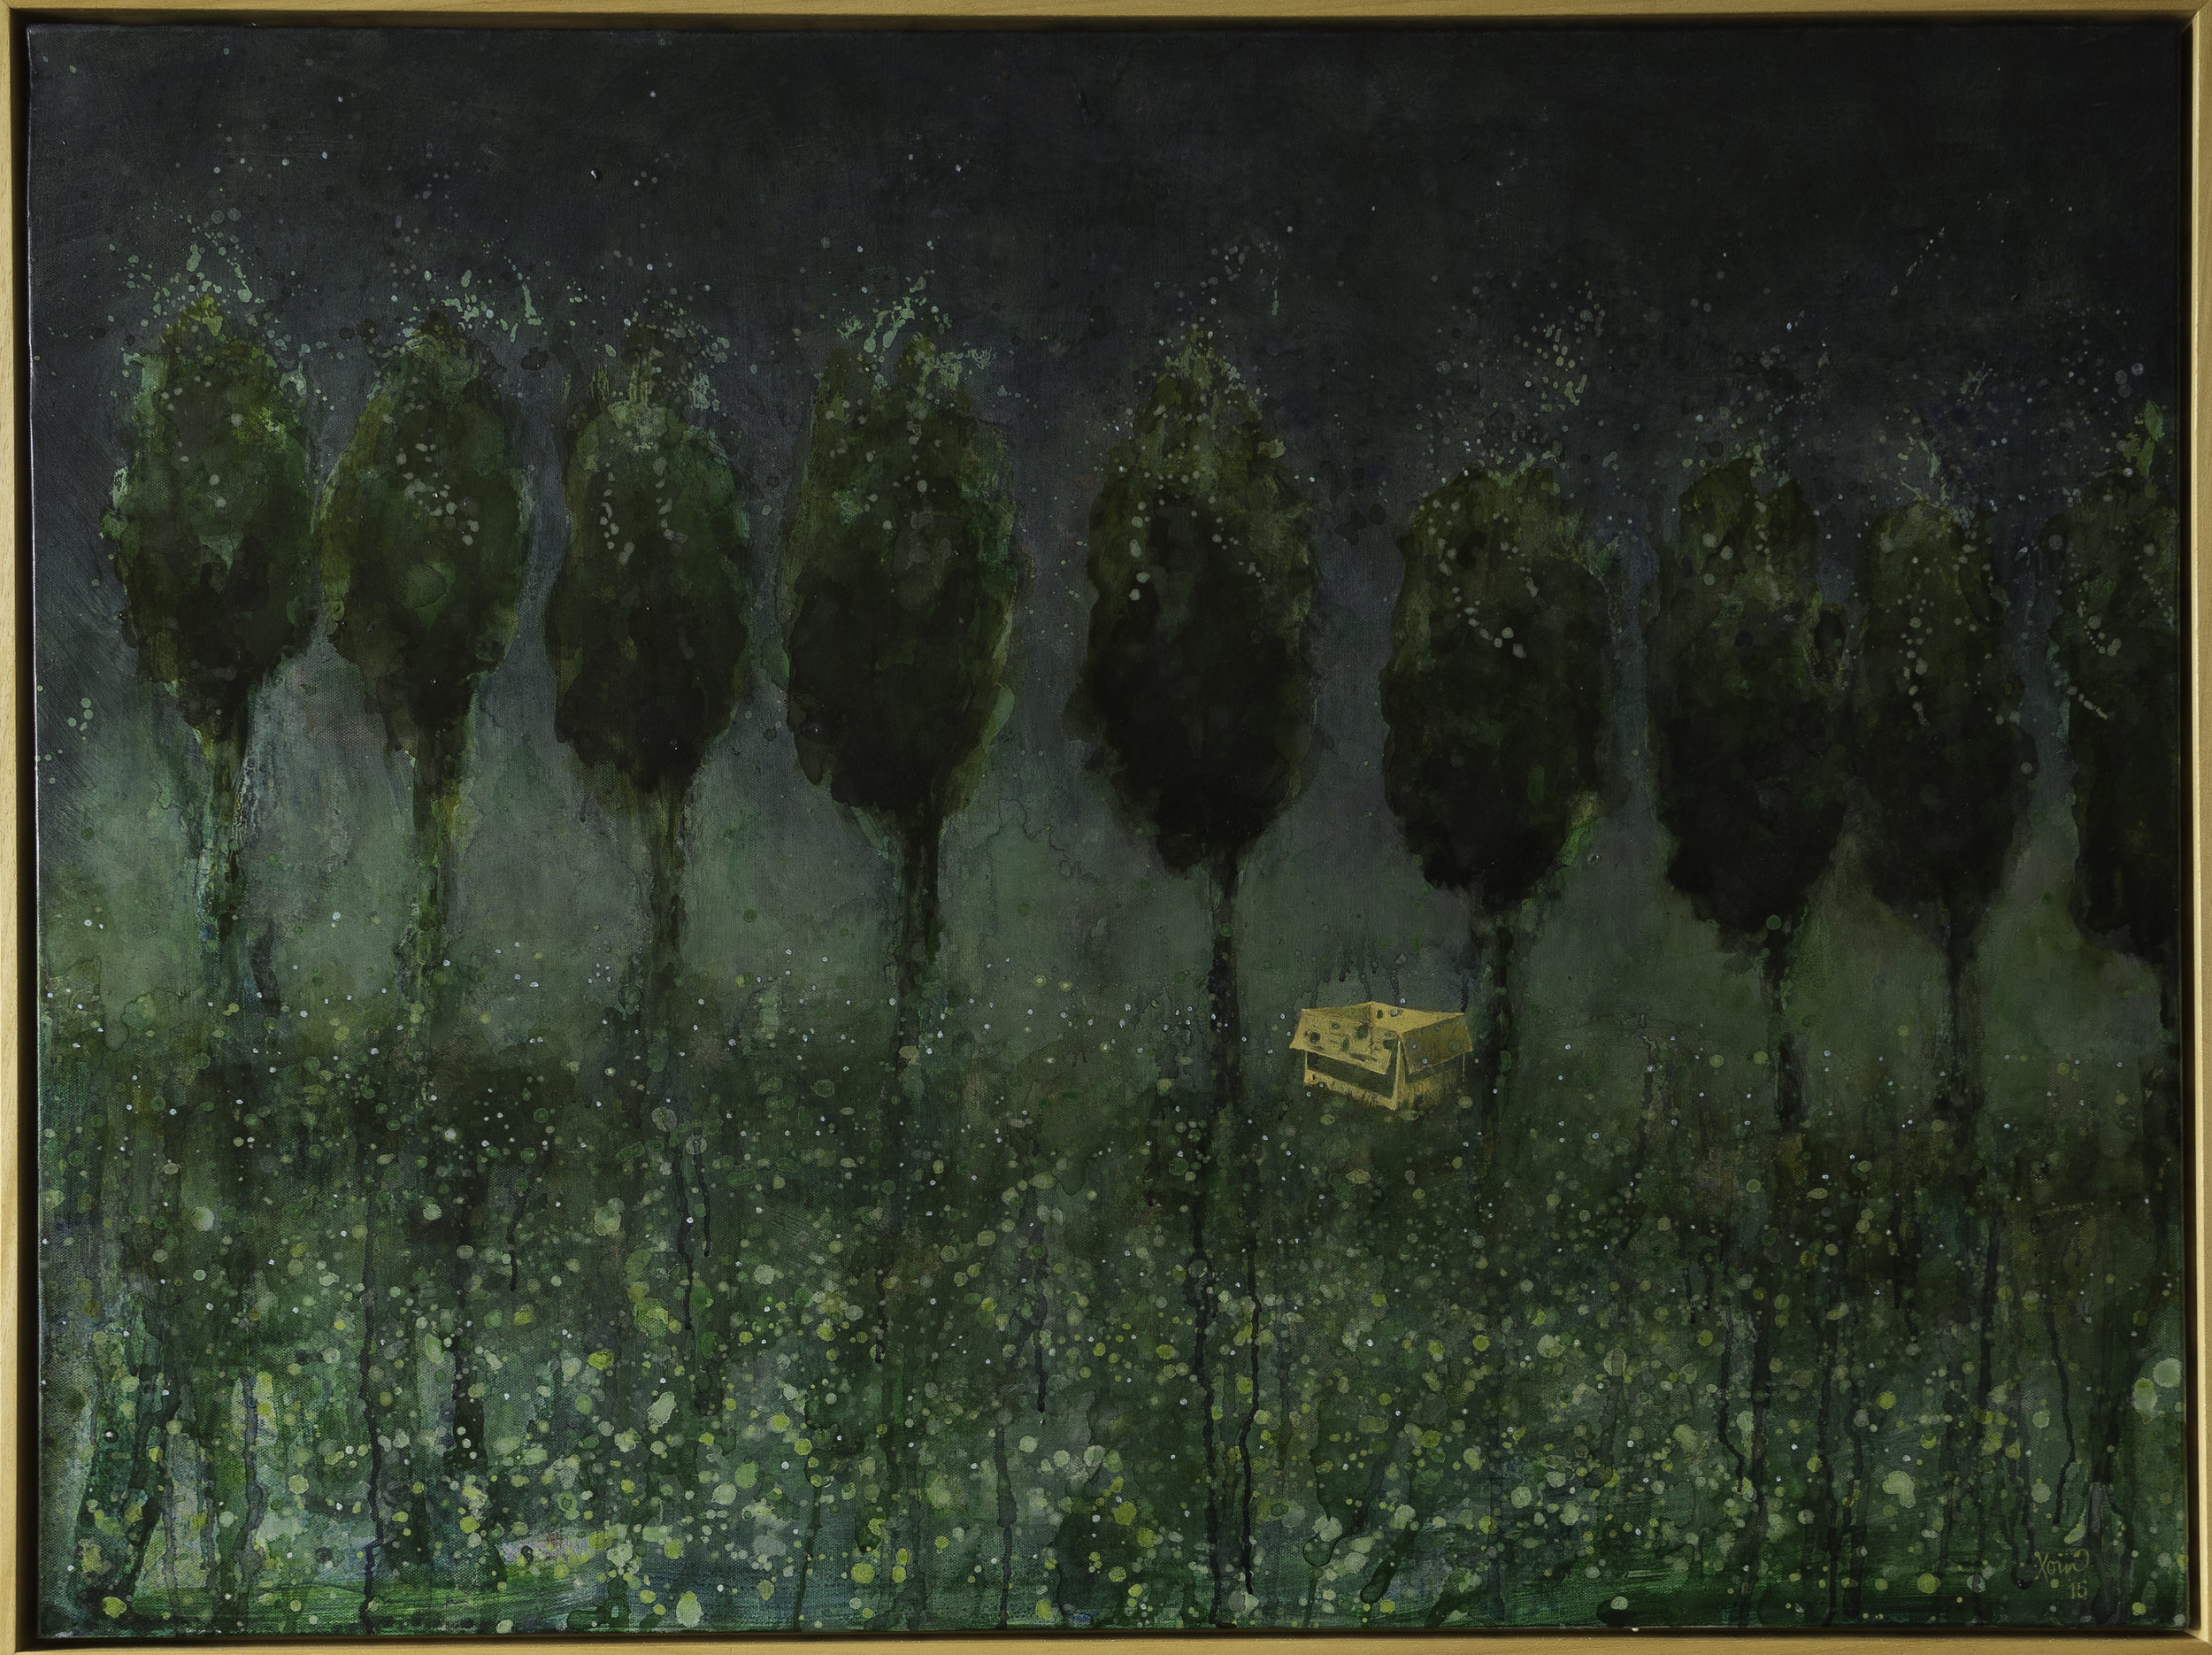 "Cardboard box in a forest" 78.5x104.5cm (Framed). Acrylic on canvas 2015.